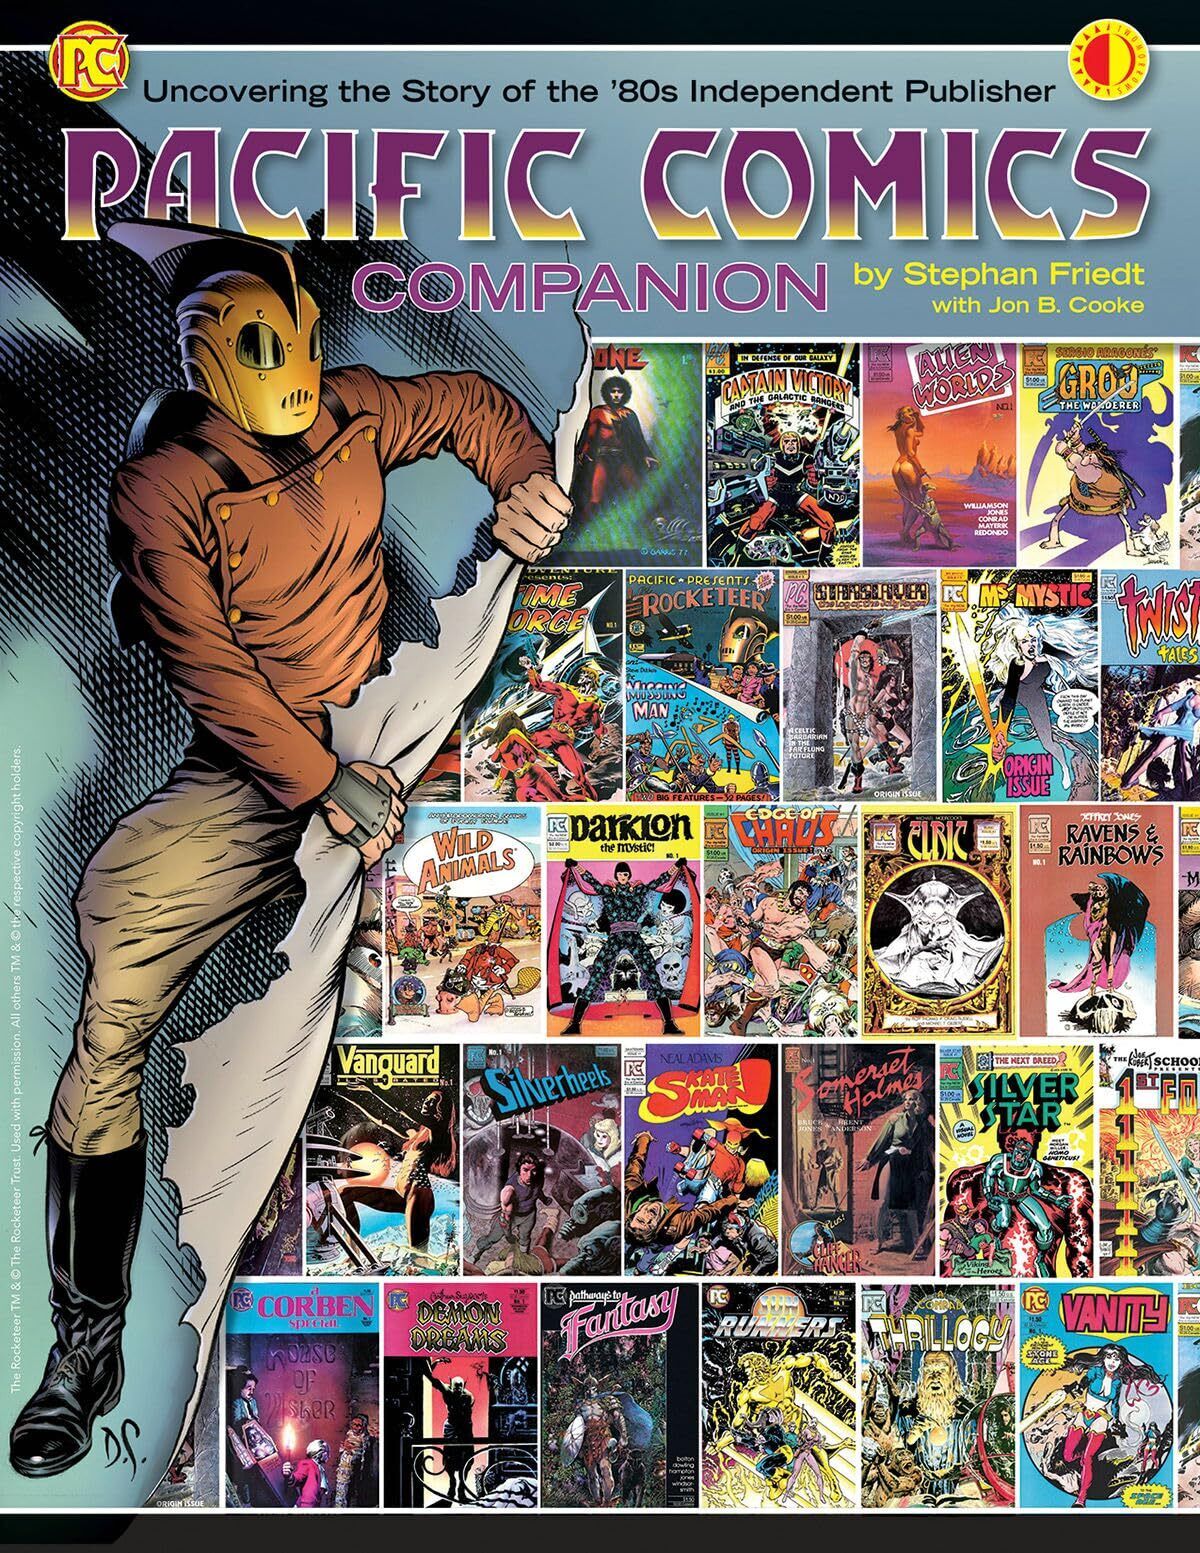 Jon B. Cooke Stephan Friedt The Pacific Comics Companion (Paperback)